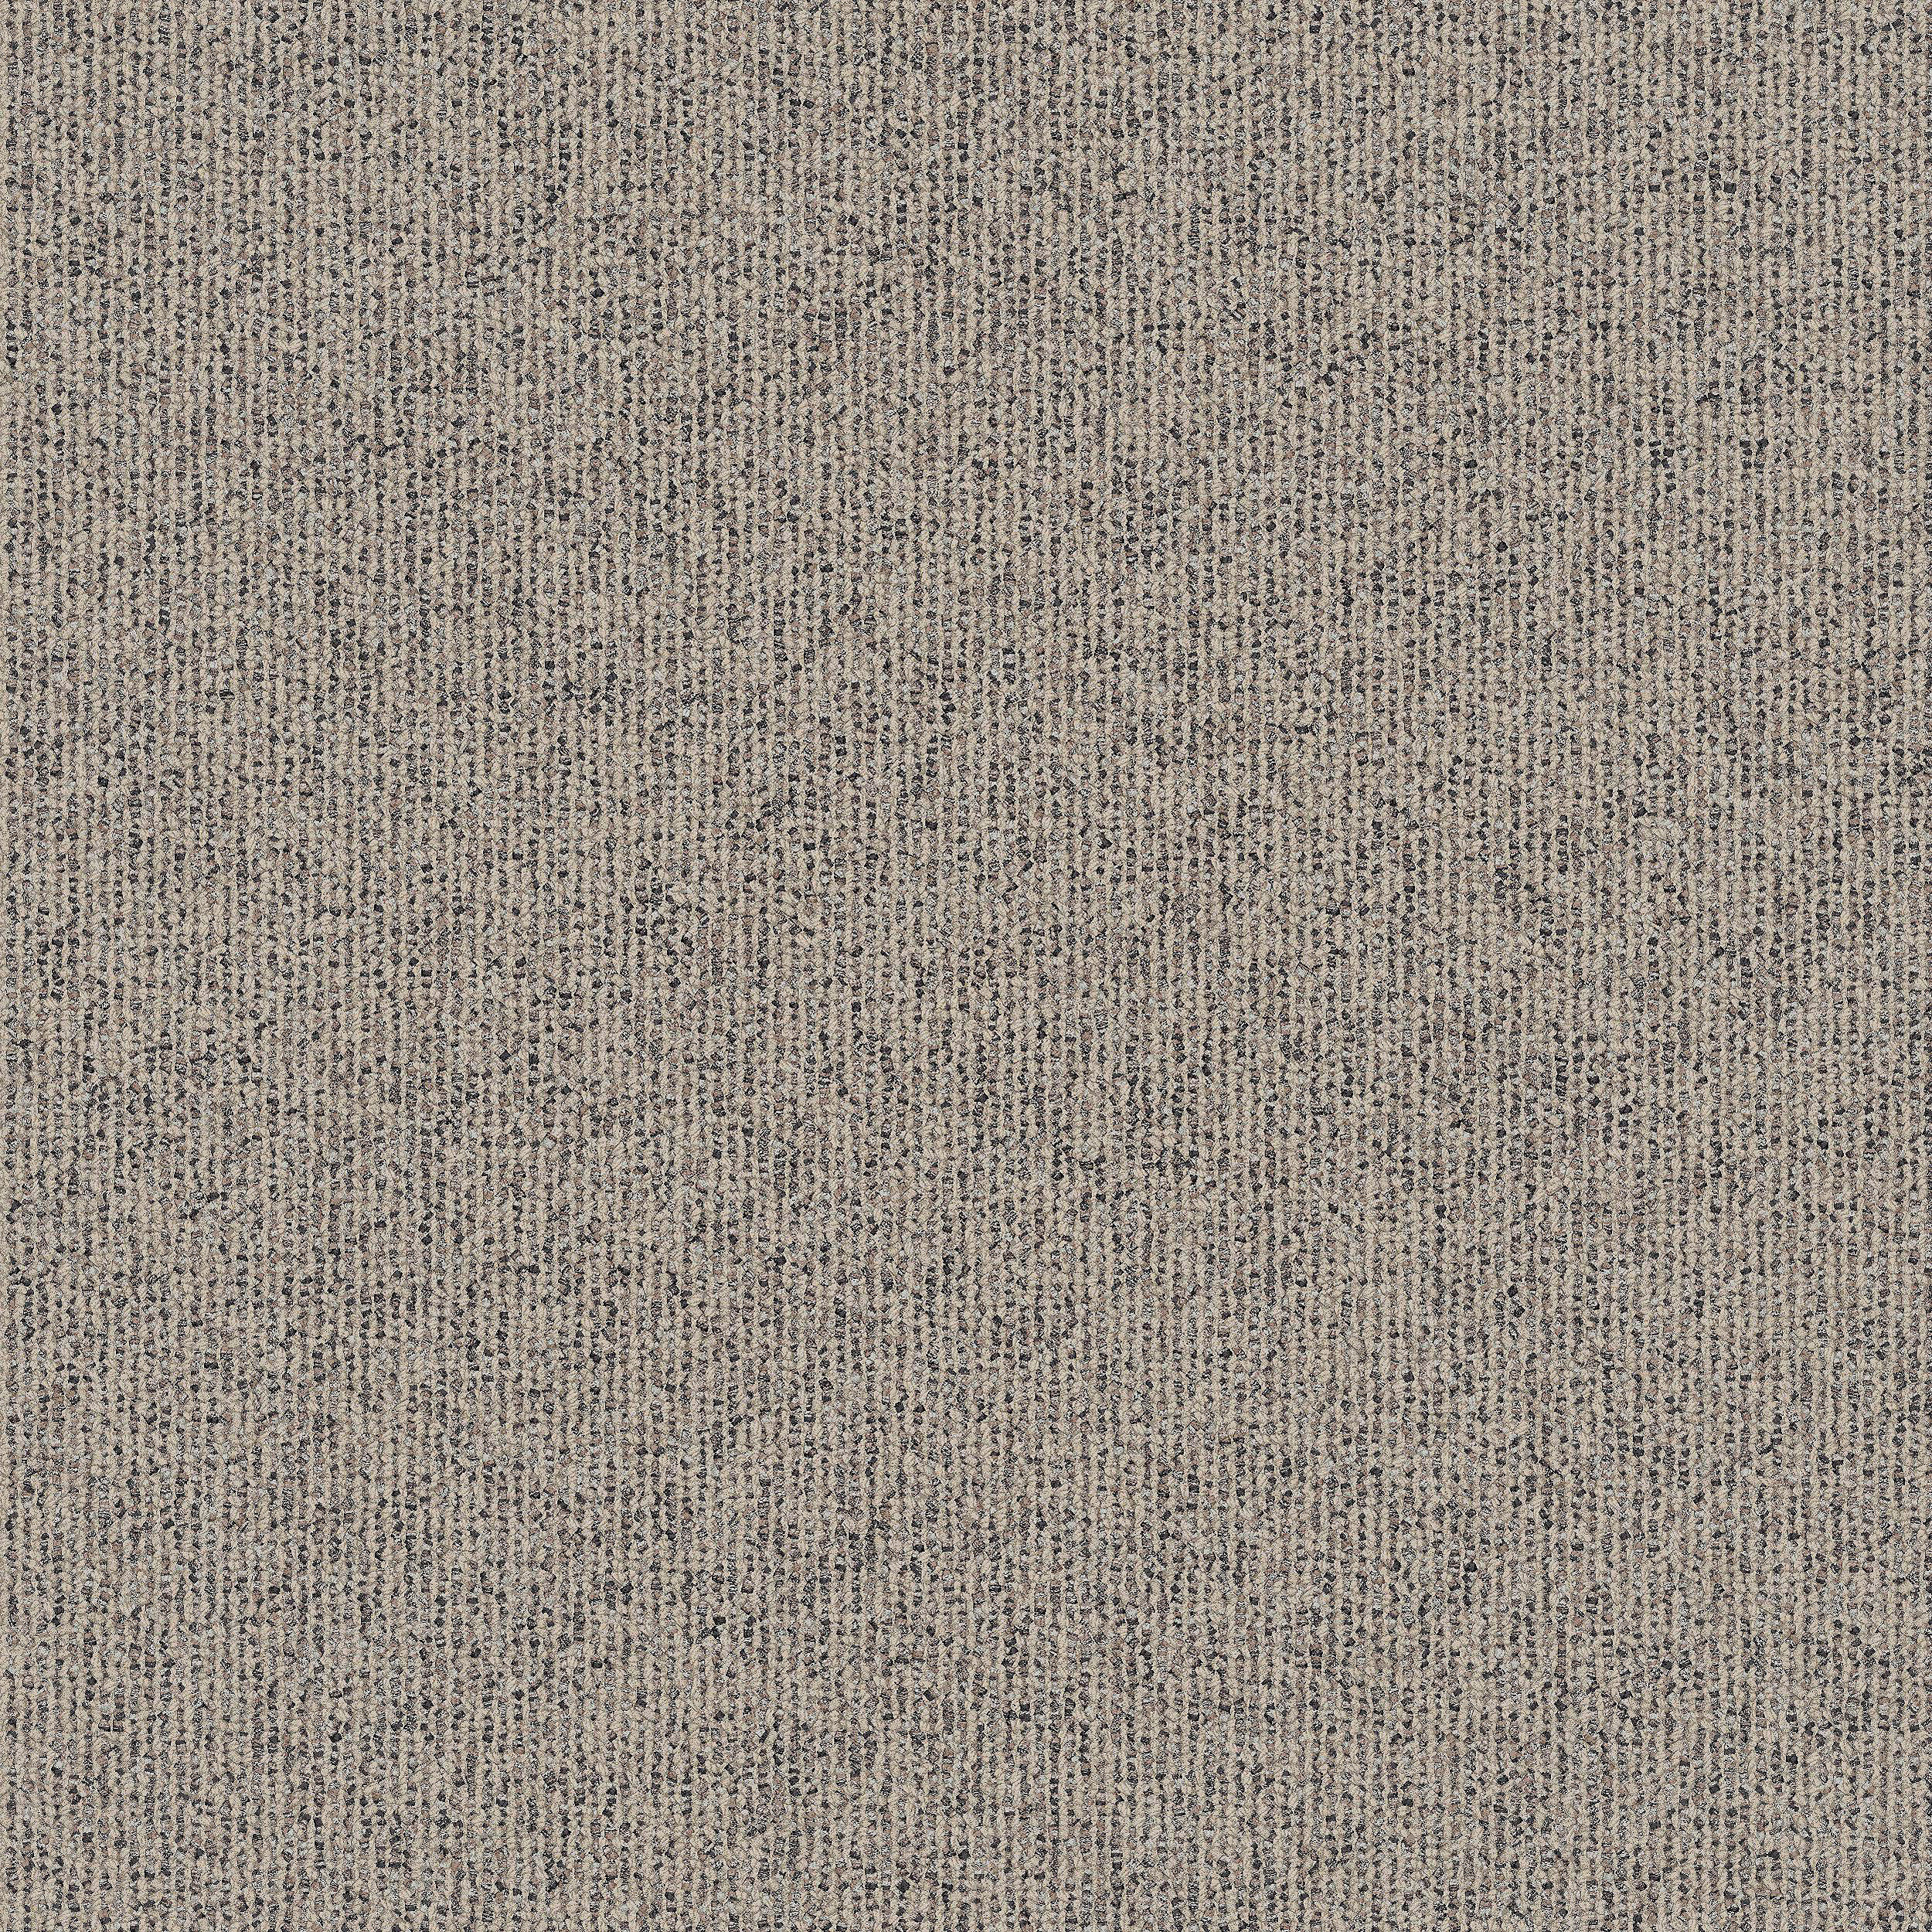 Broomed Carpet Tile In Broomed Fieldstone imagen número 4